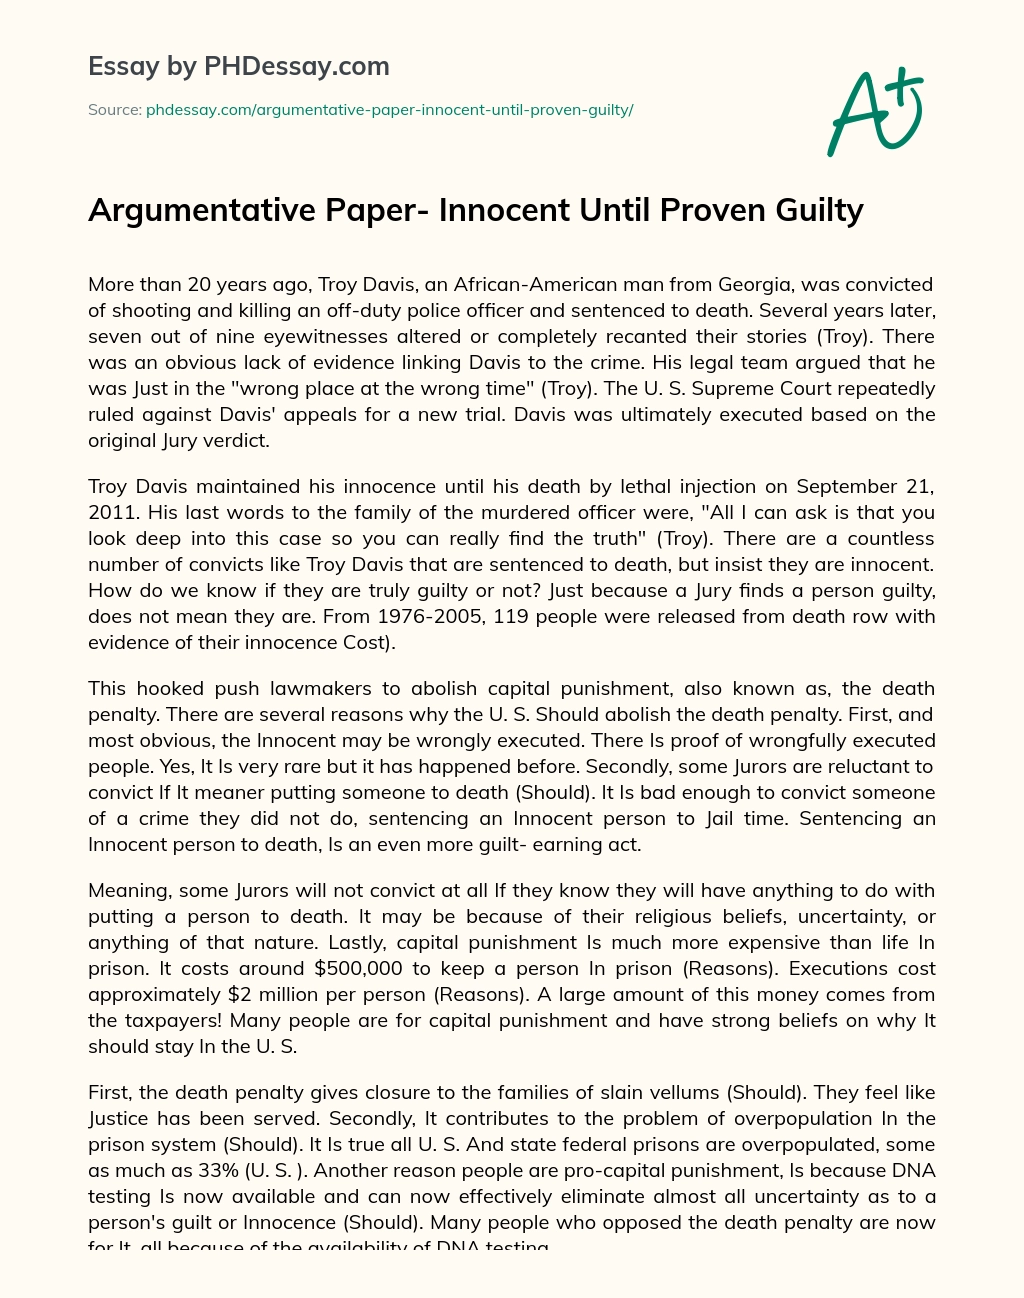 Argumentative Paper- Innocent Until Proven Guilty essay